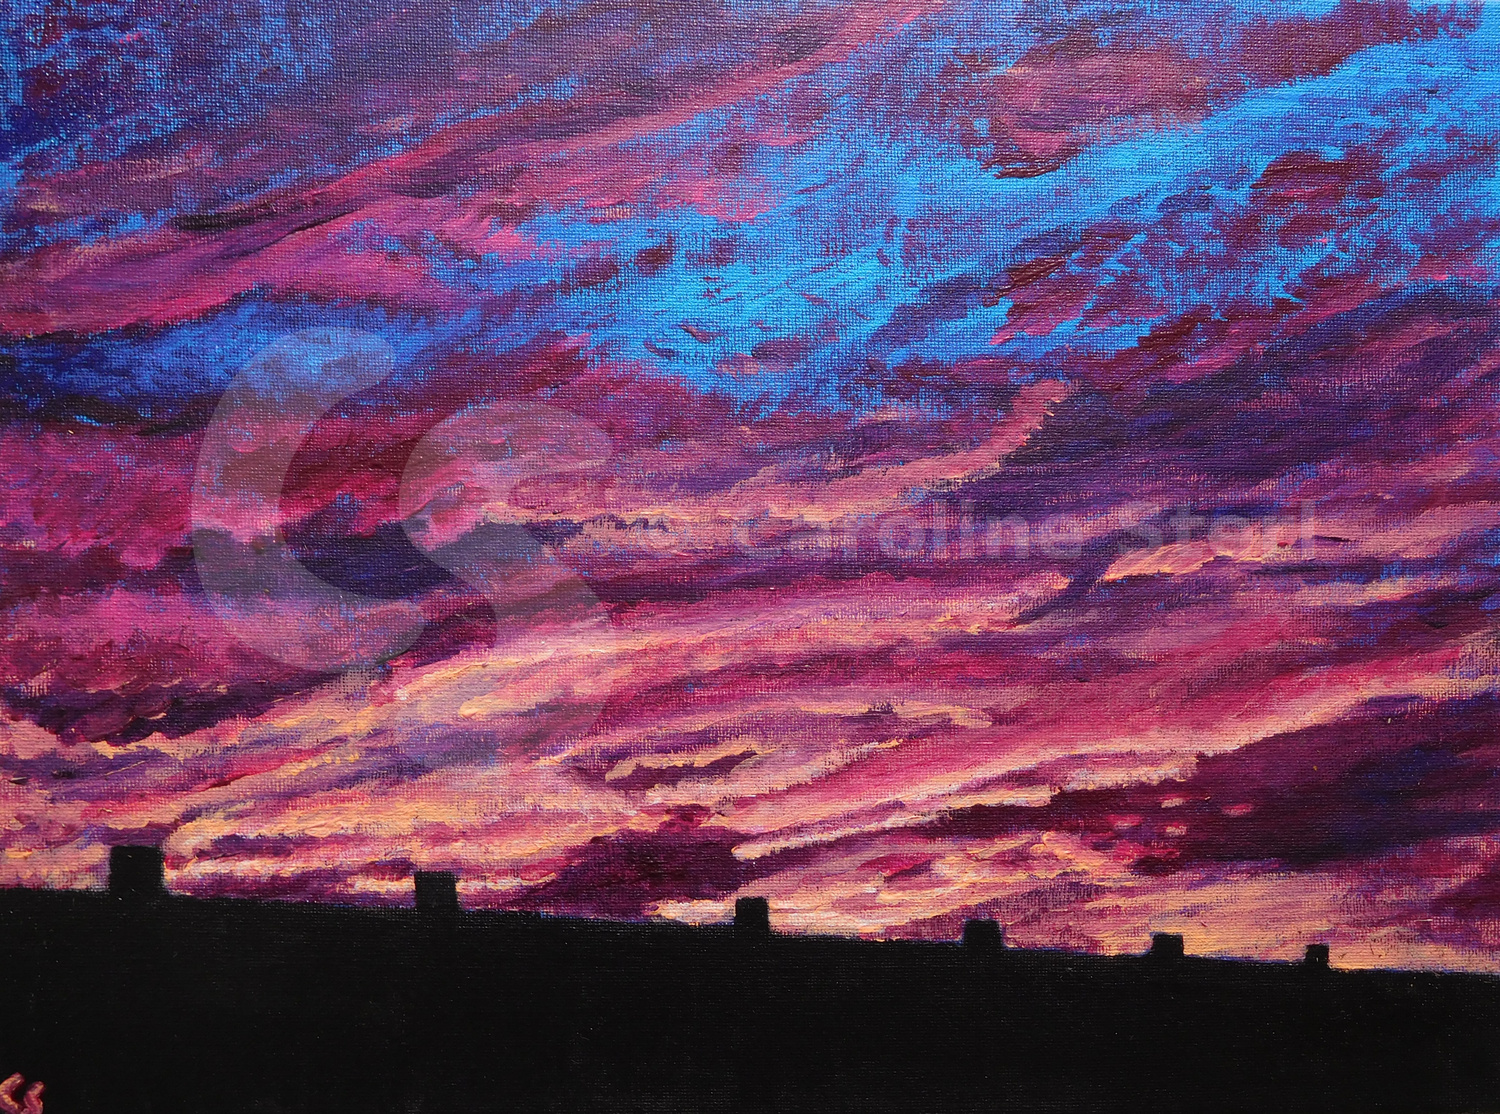 Painting: Sunset